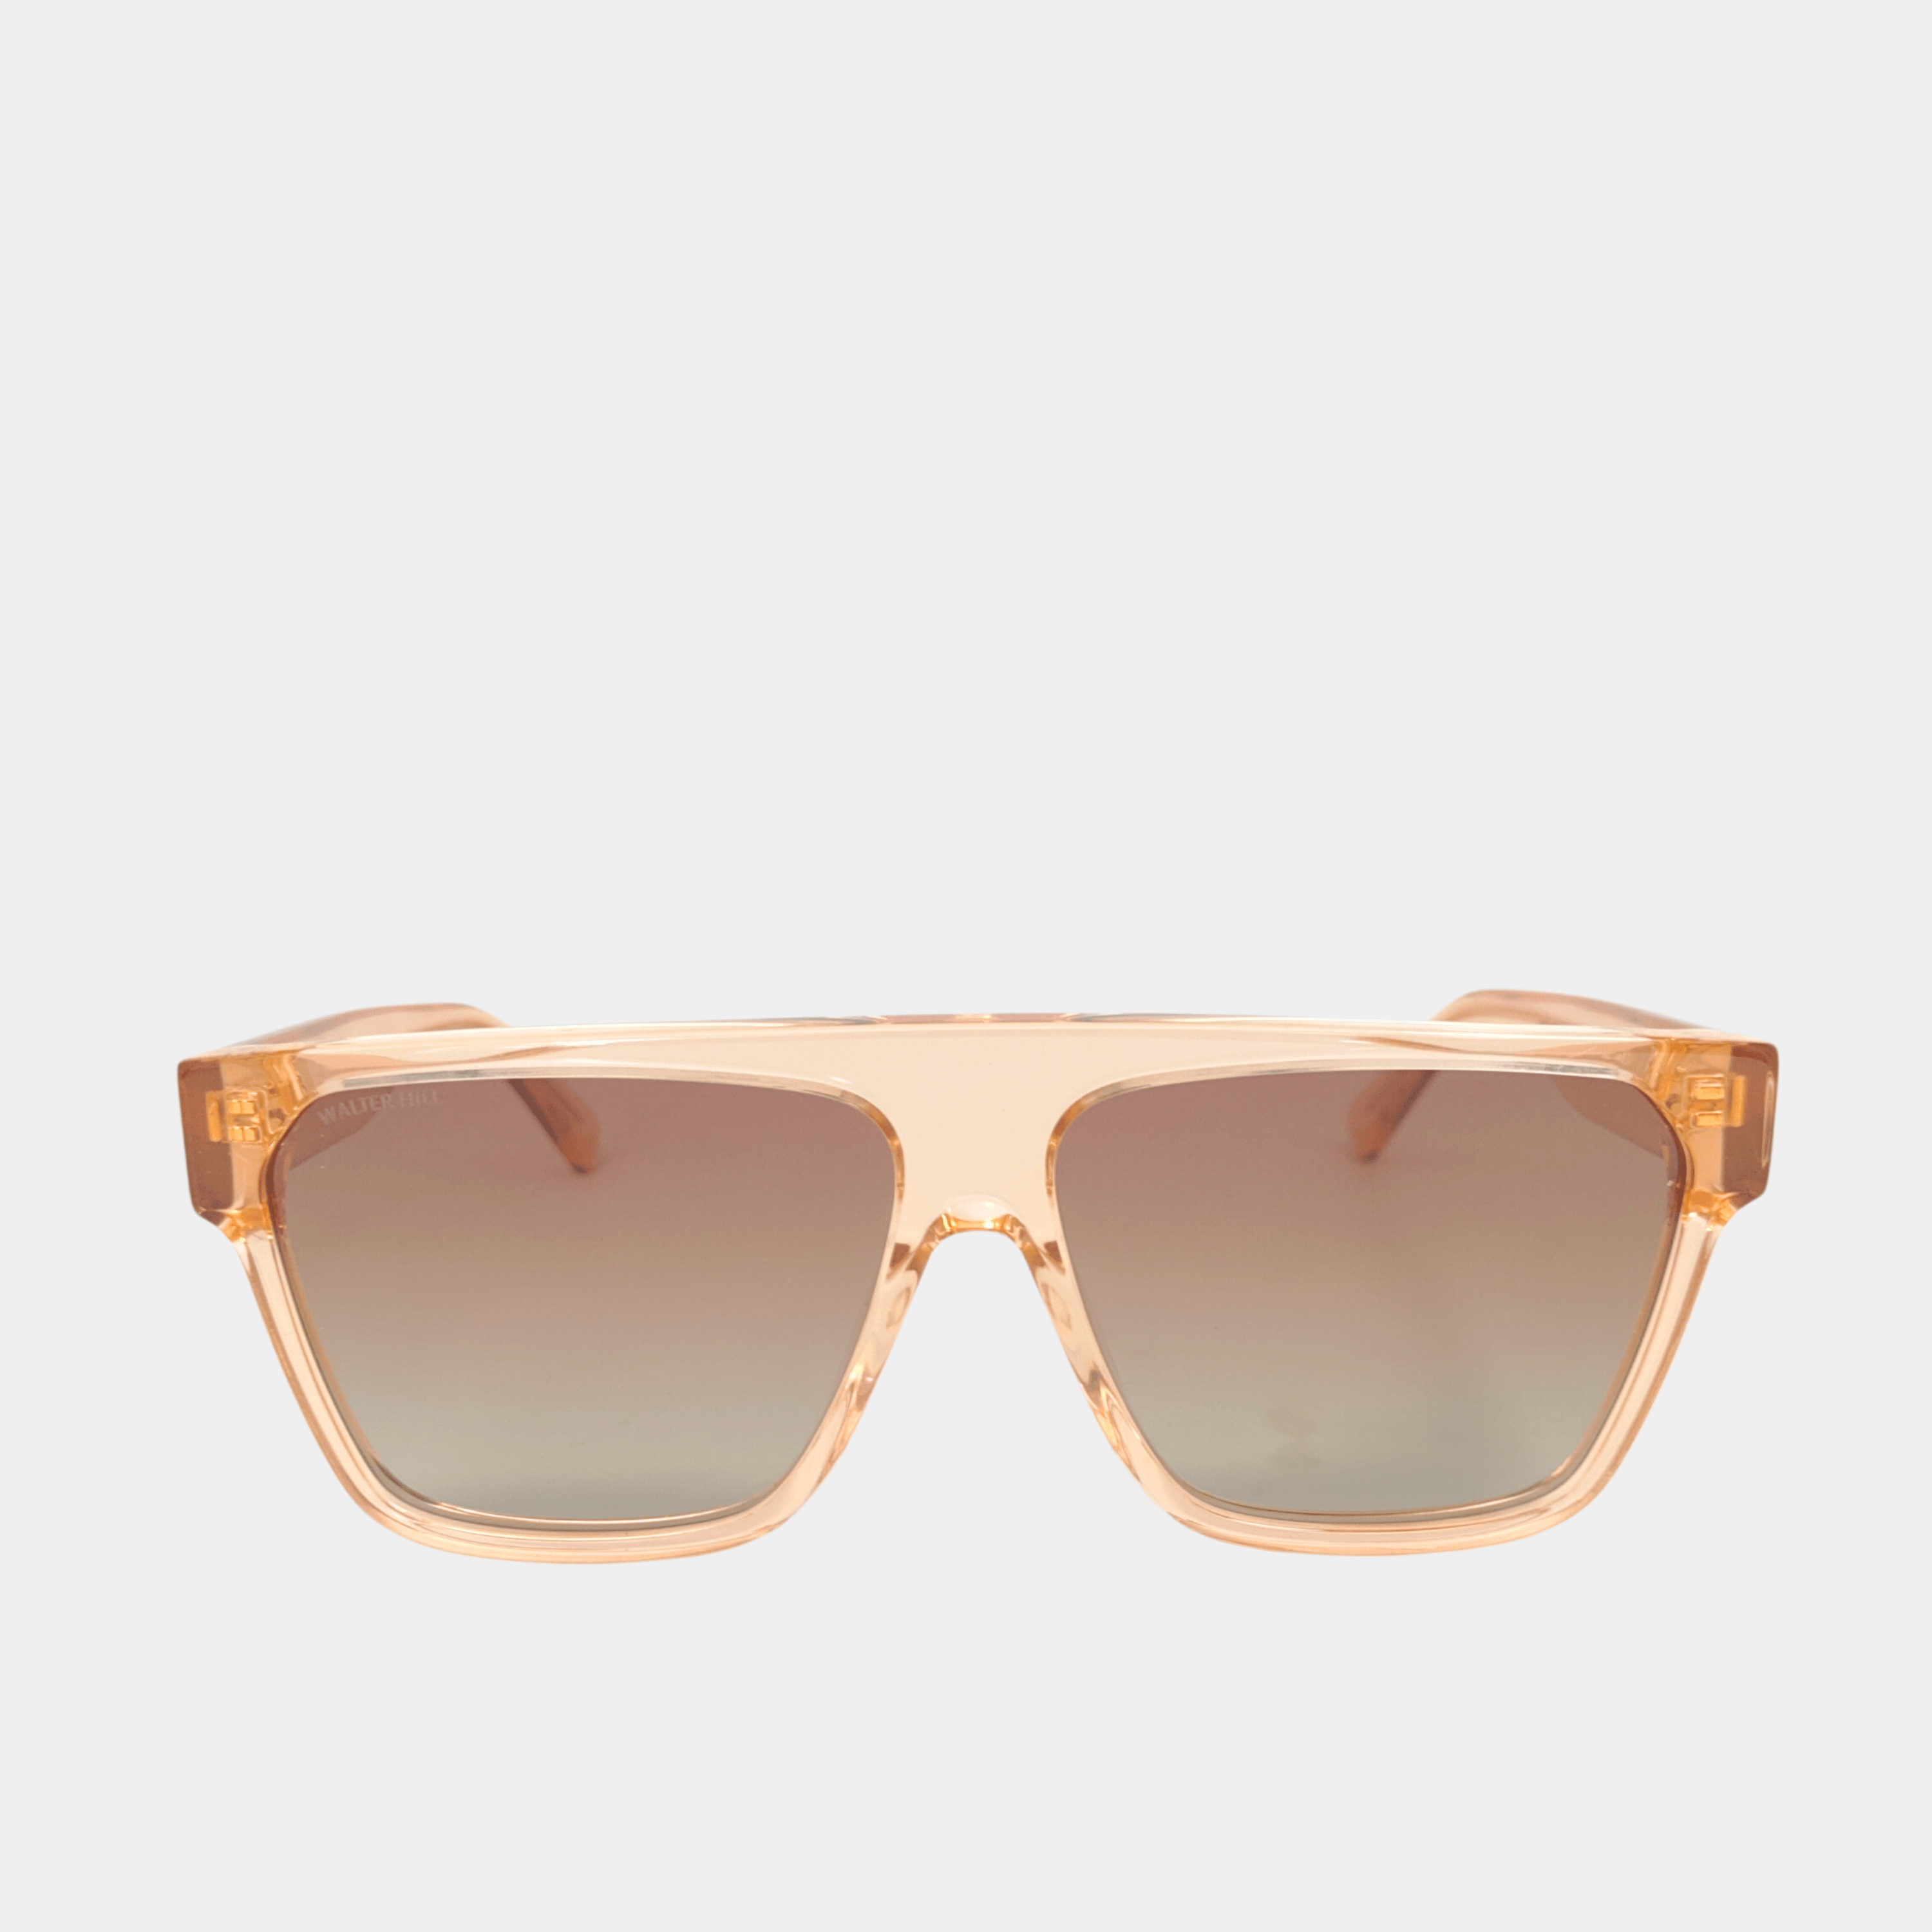 Walter Hill Sunglasses Medium/Large / Cat.2 / Mazzuchelli Acetate KAYA - Rosé